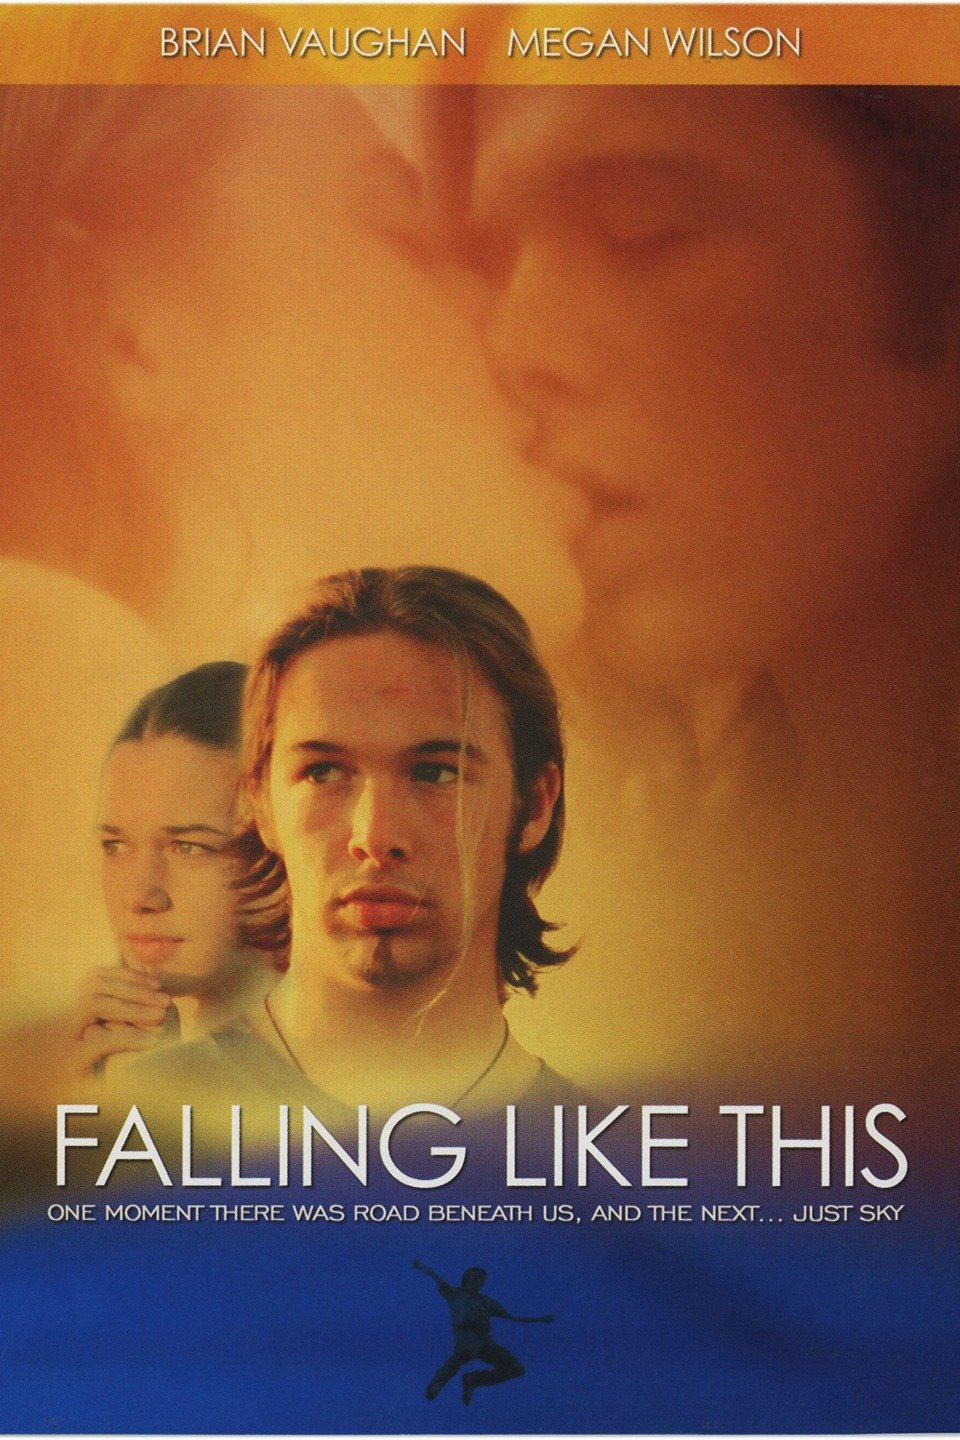 Falling like. This Fall фильм. Like this кино. Харли Вентон актер. More like this film.